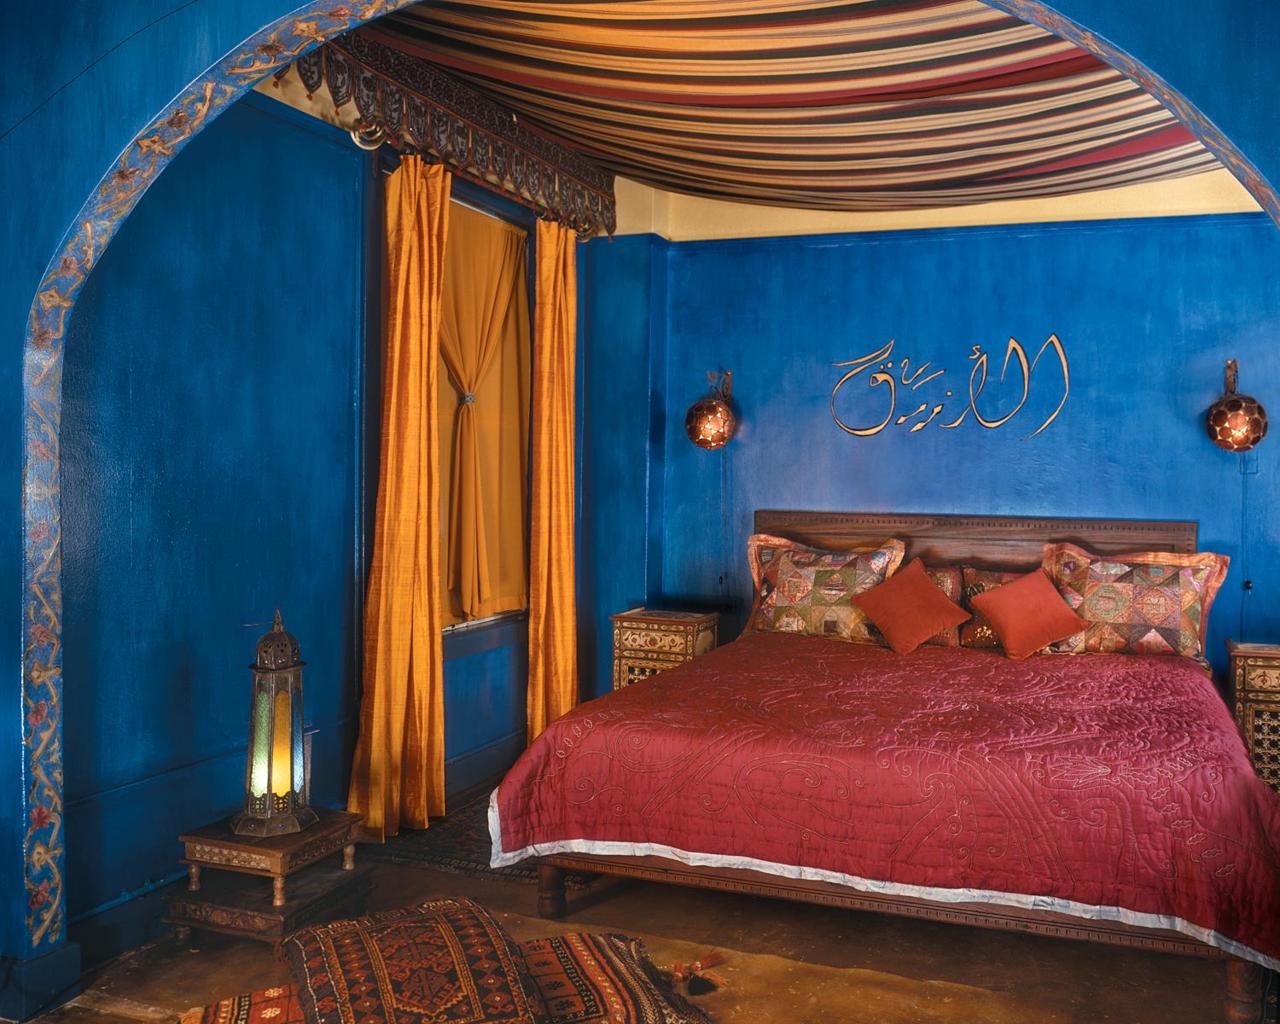 Moroccan-Inspired Bedroom Decor Ideas